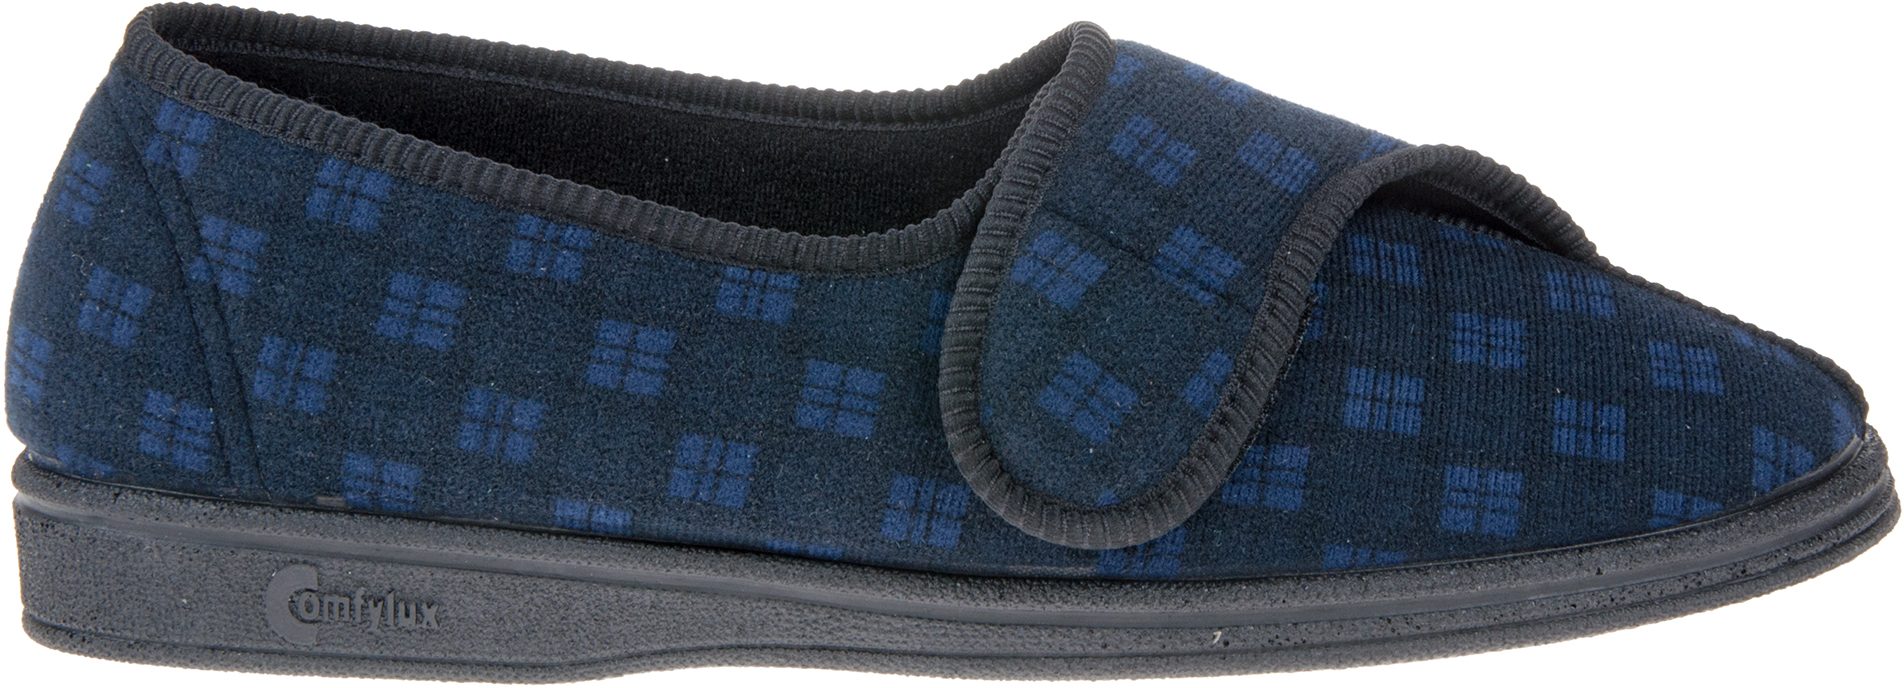 Comfylux Paul Blue pau - Full Slippers - Humphries Shoes